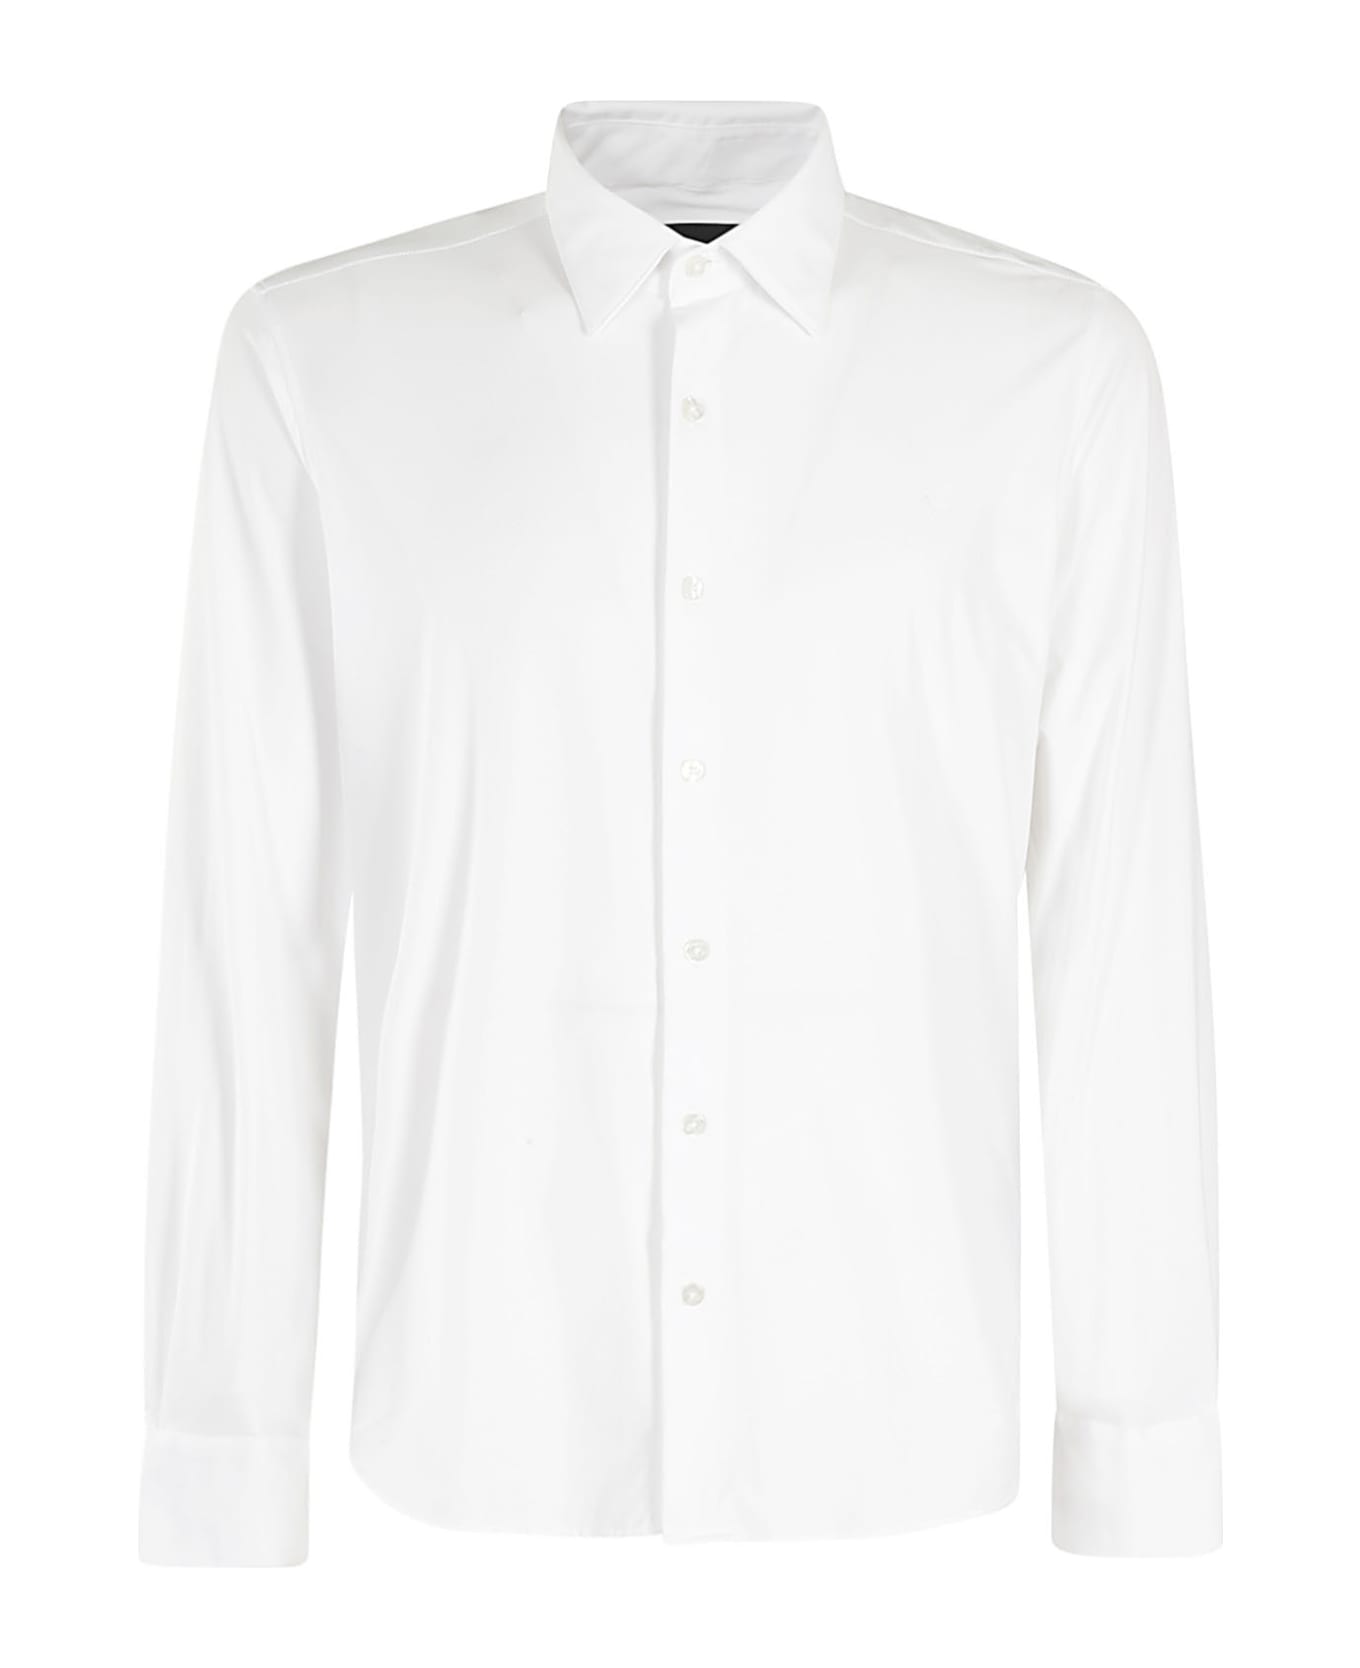 RRD - Roberto Ricci Design Oxford Shirt - Bianco